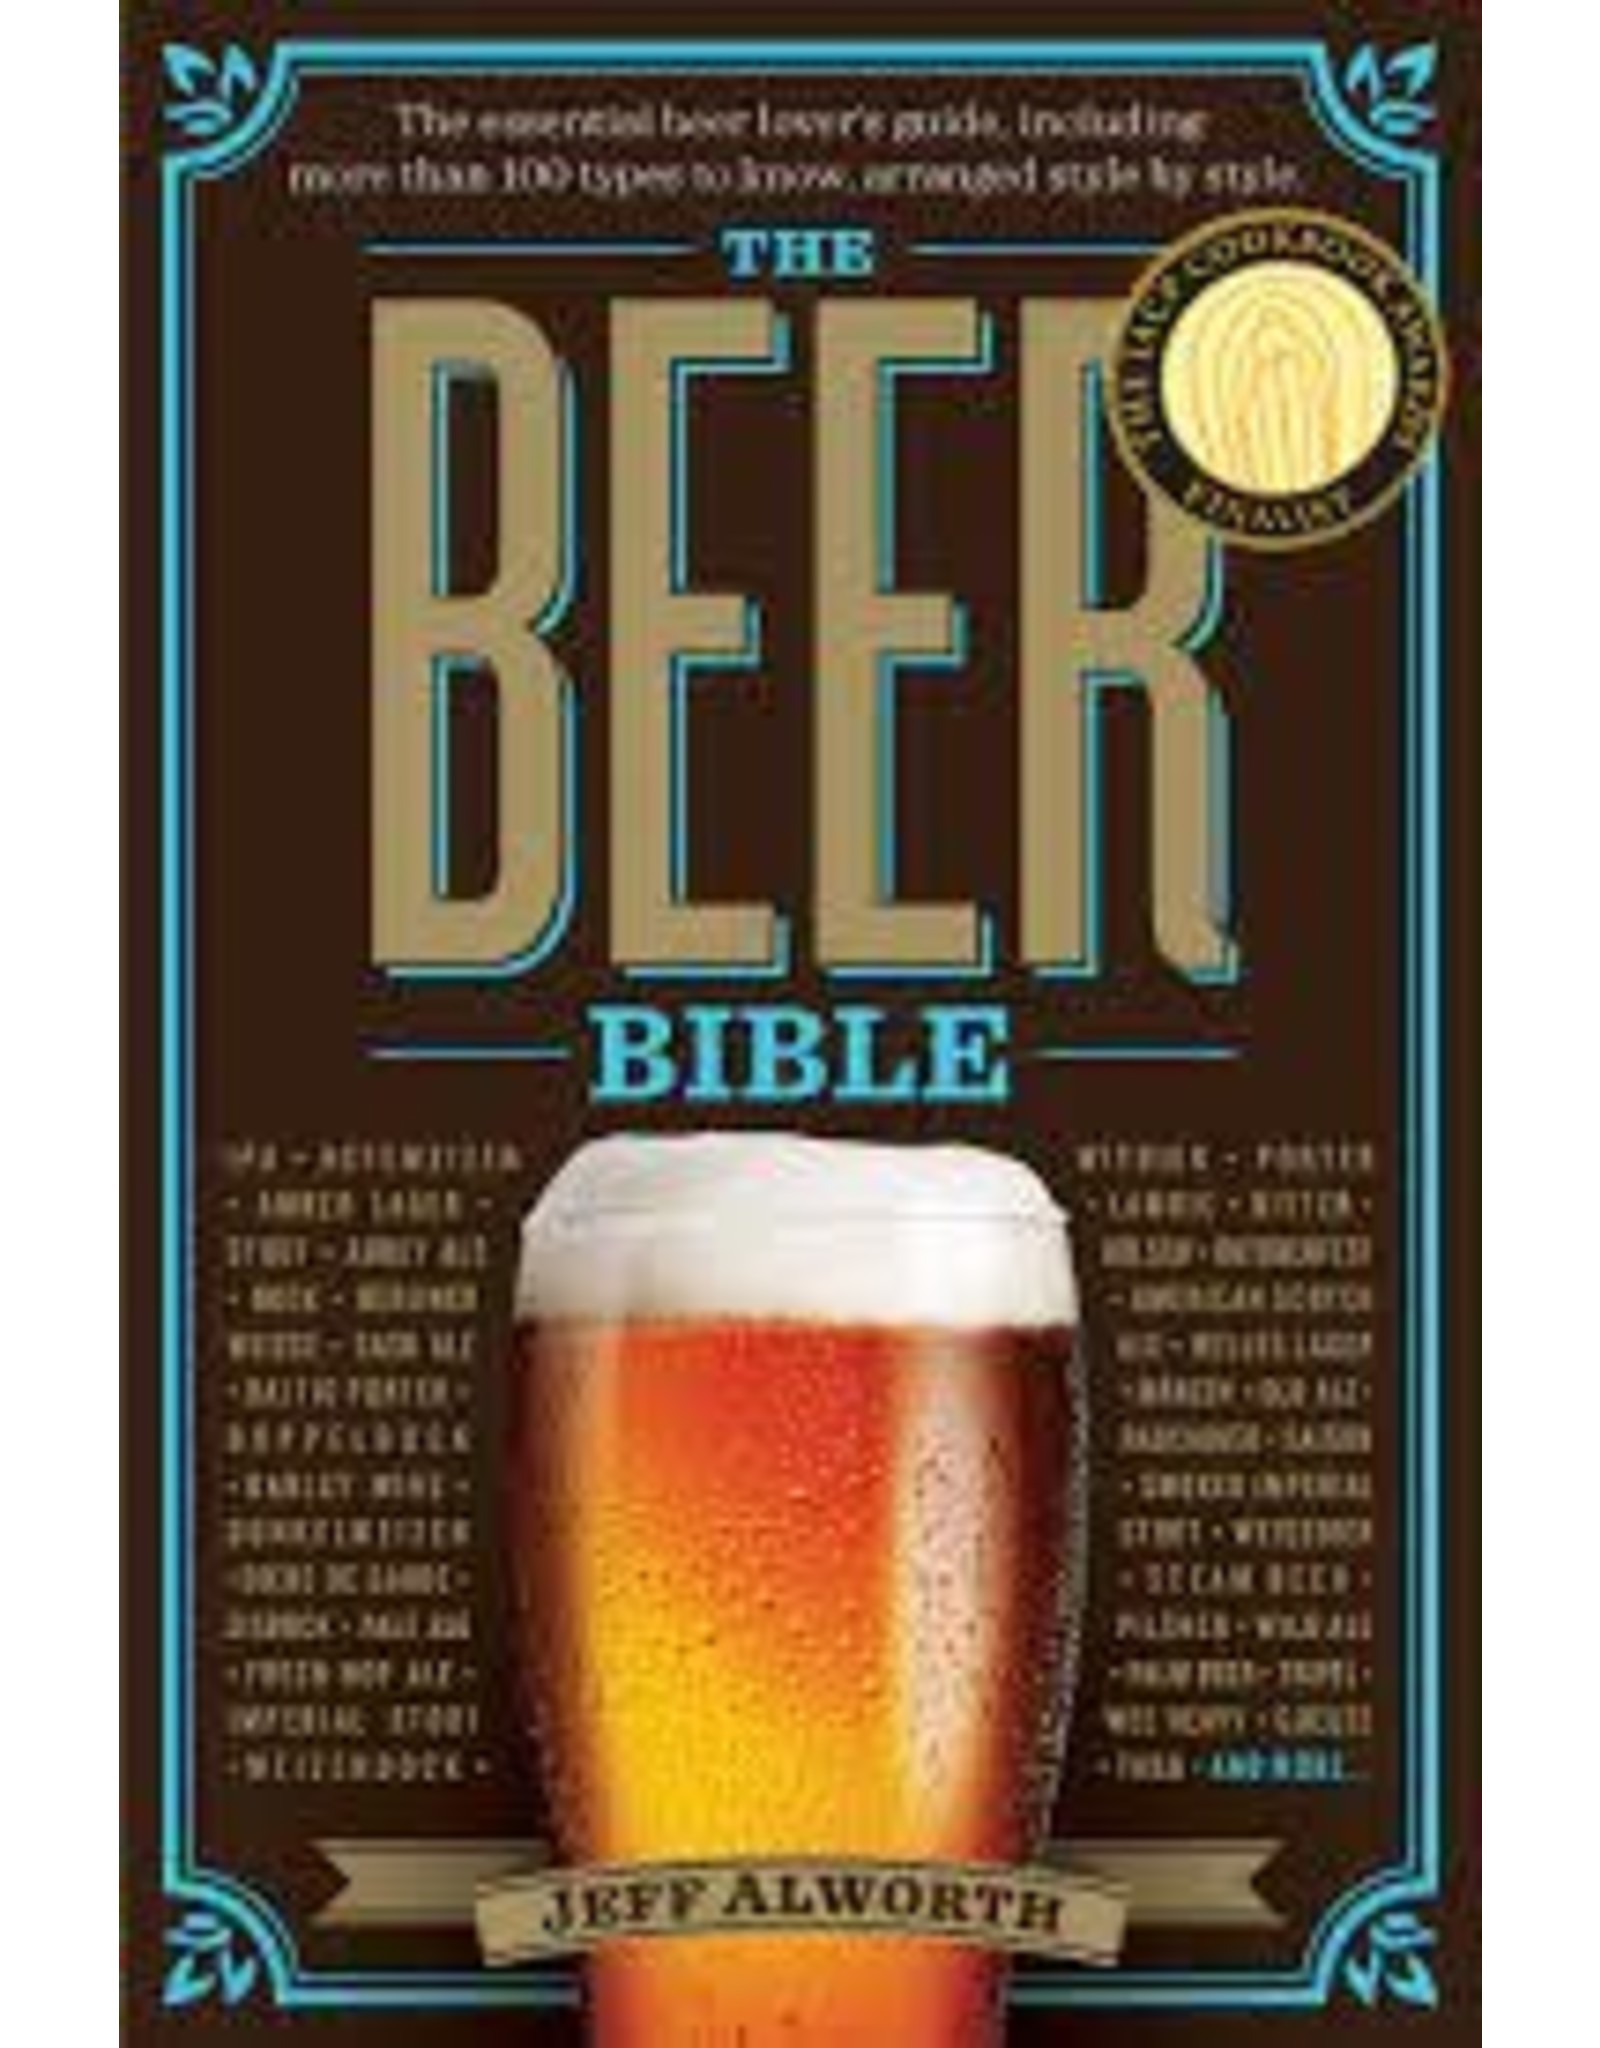 The Beer Bible  (book)